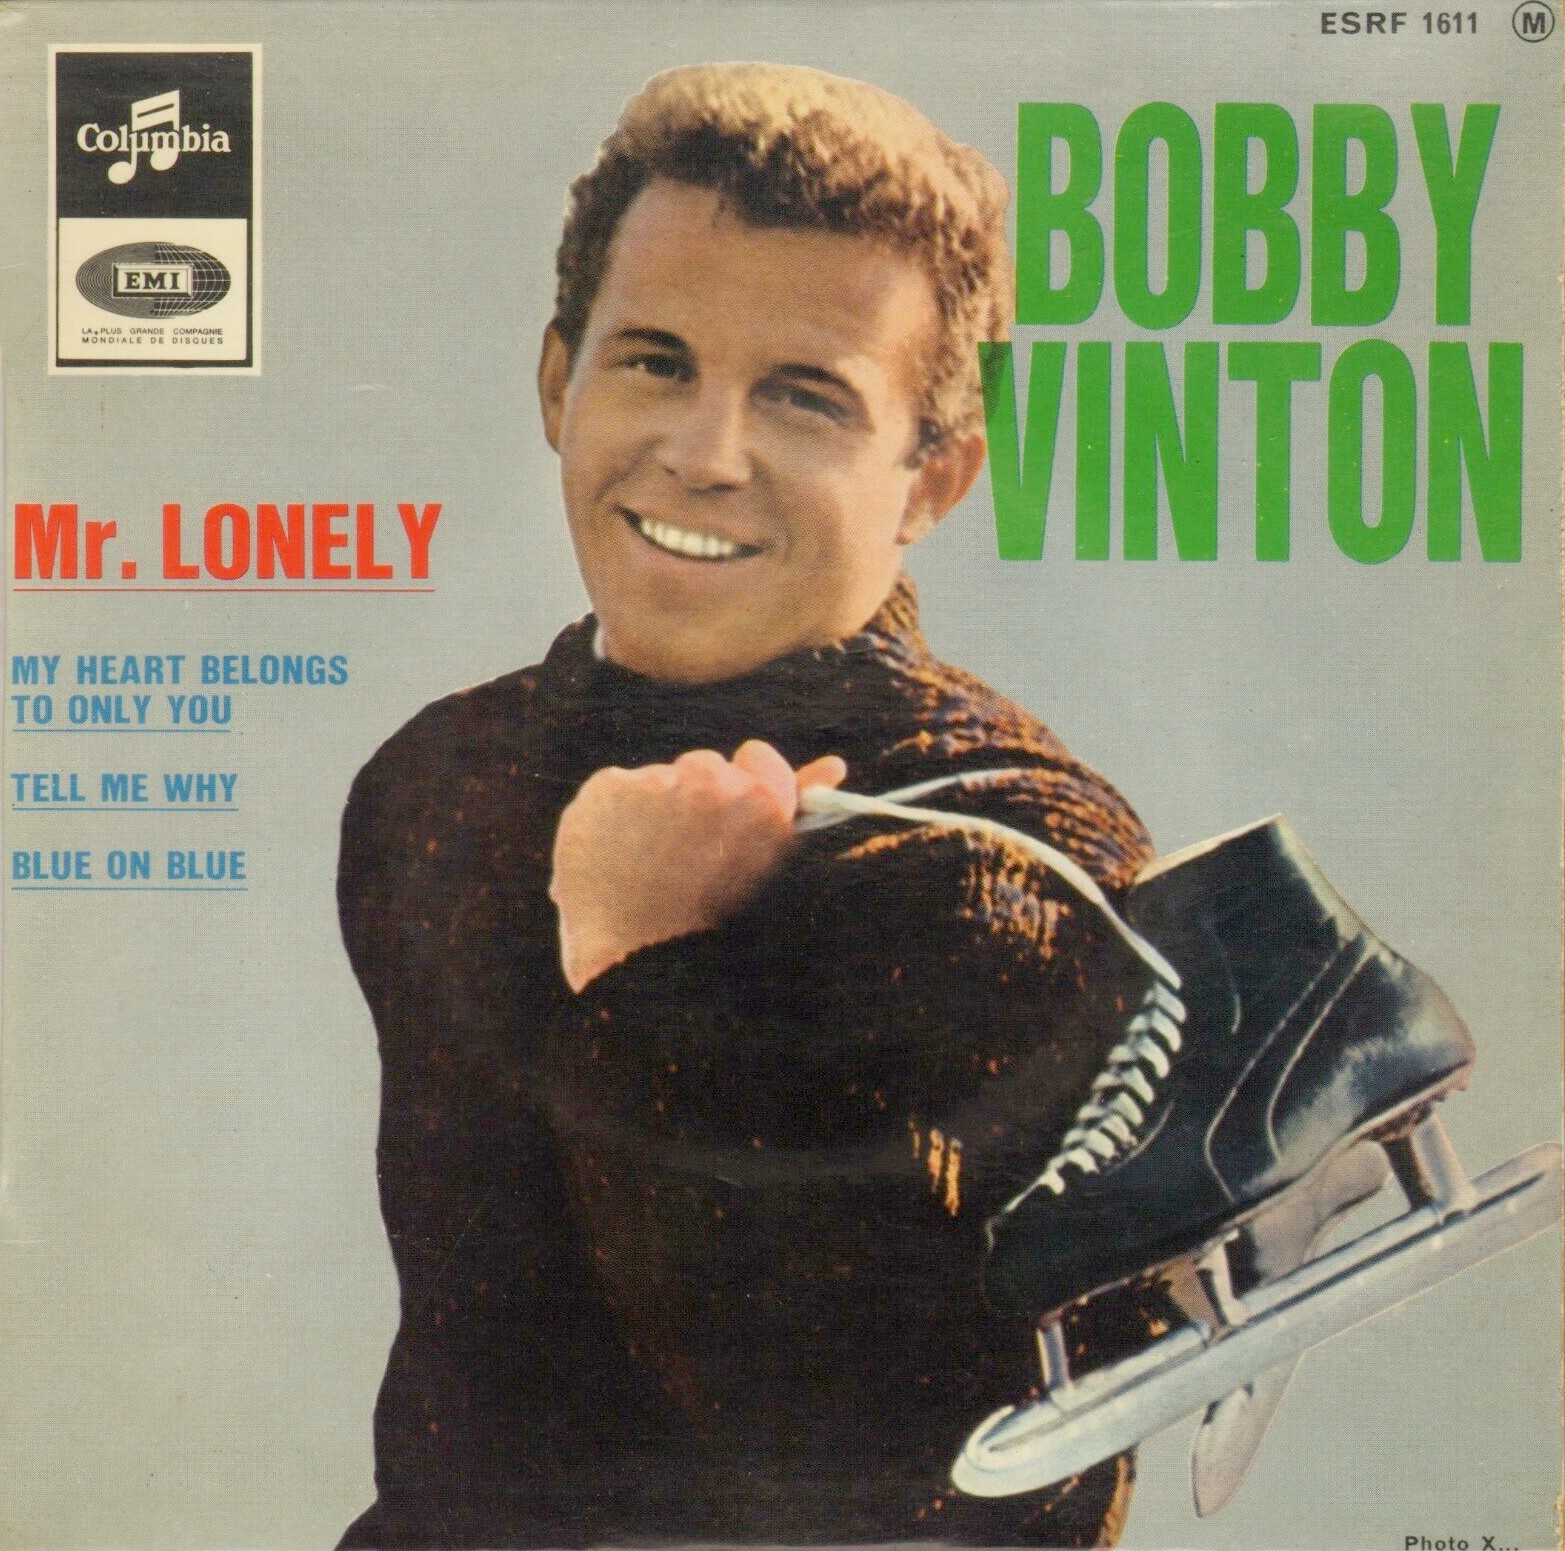 Bobby VINTON - 1964 - FR-COLUMBIA ESRF 1611 - Mr lonely (stereo) .